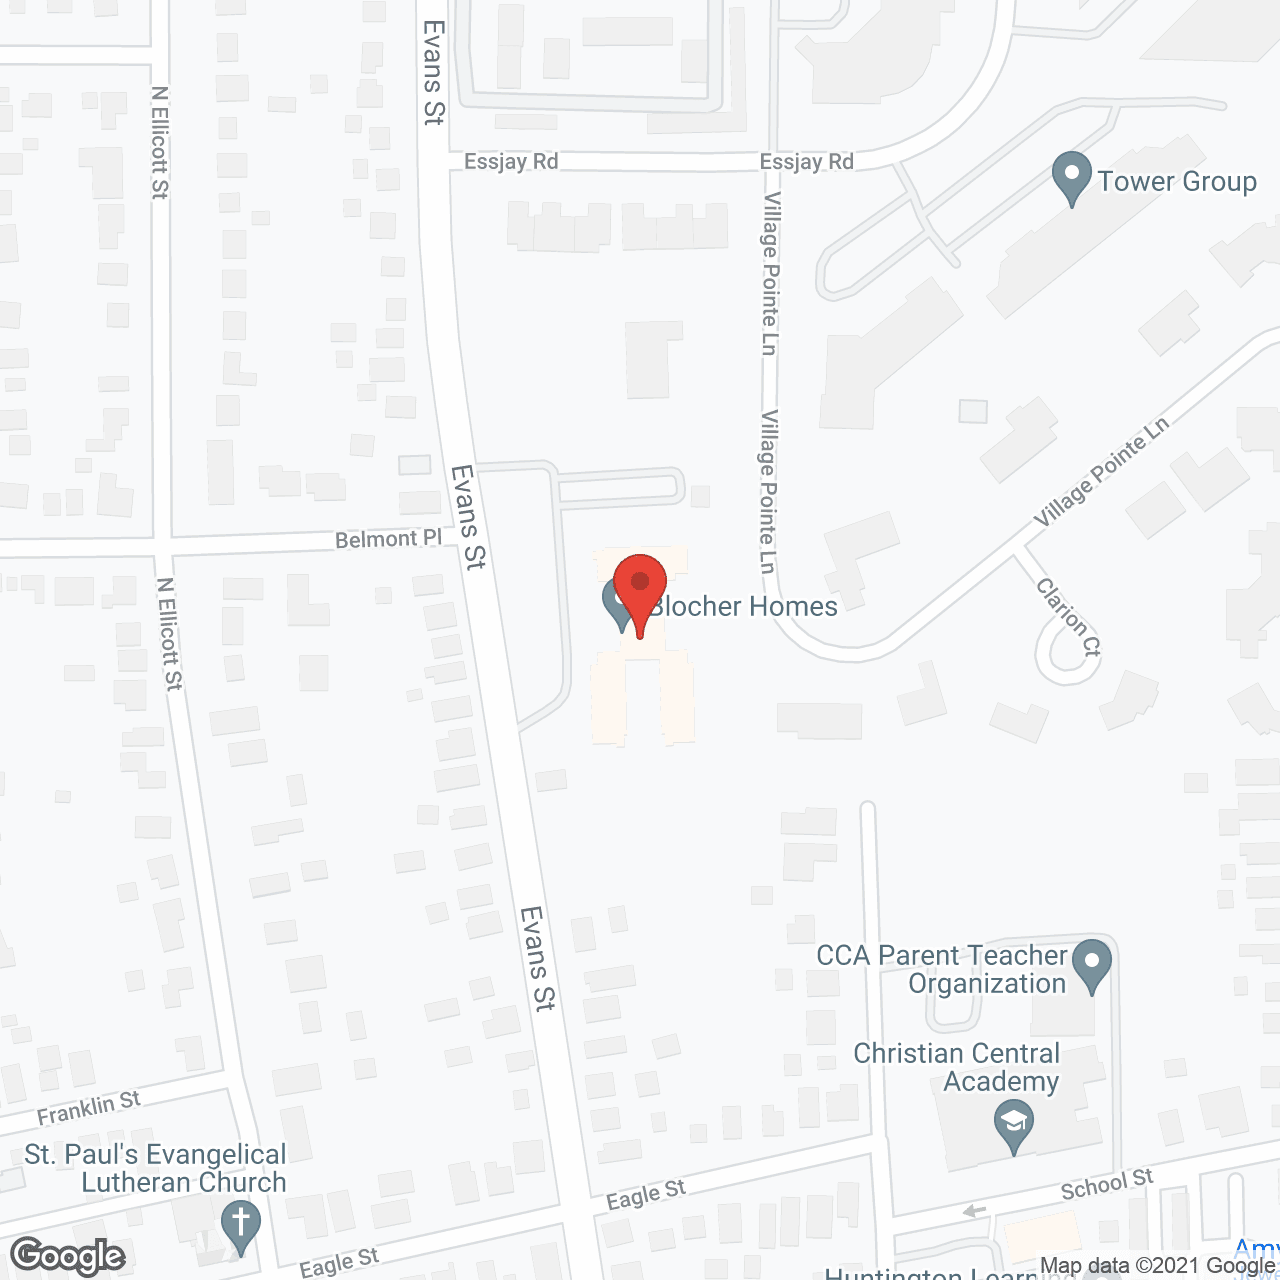 Blocher Homes in google map